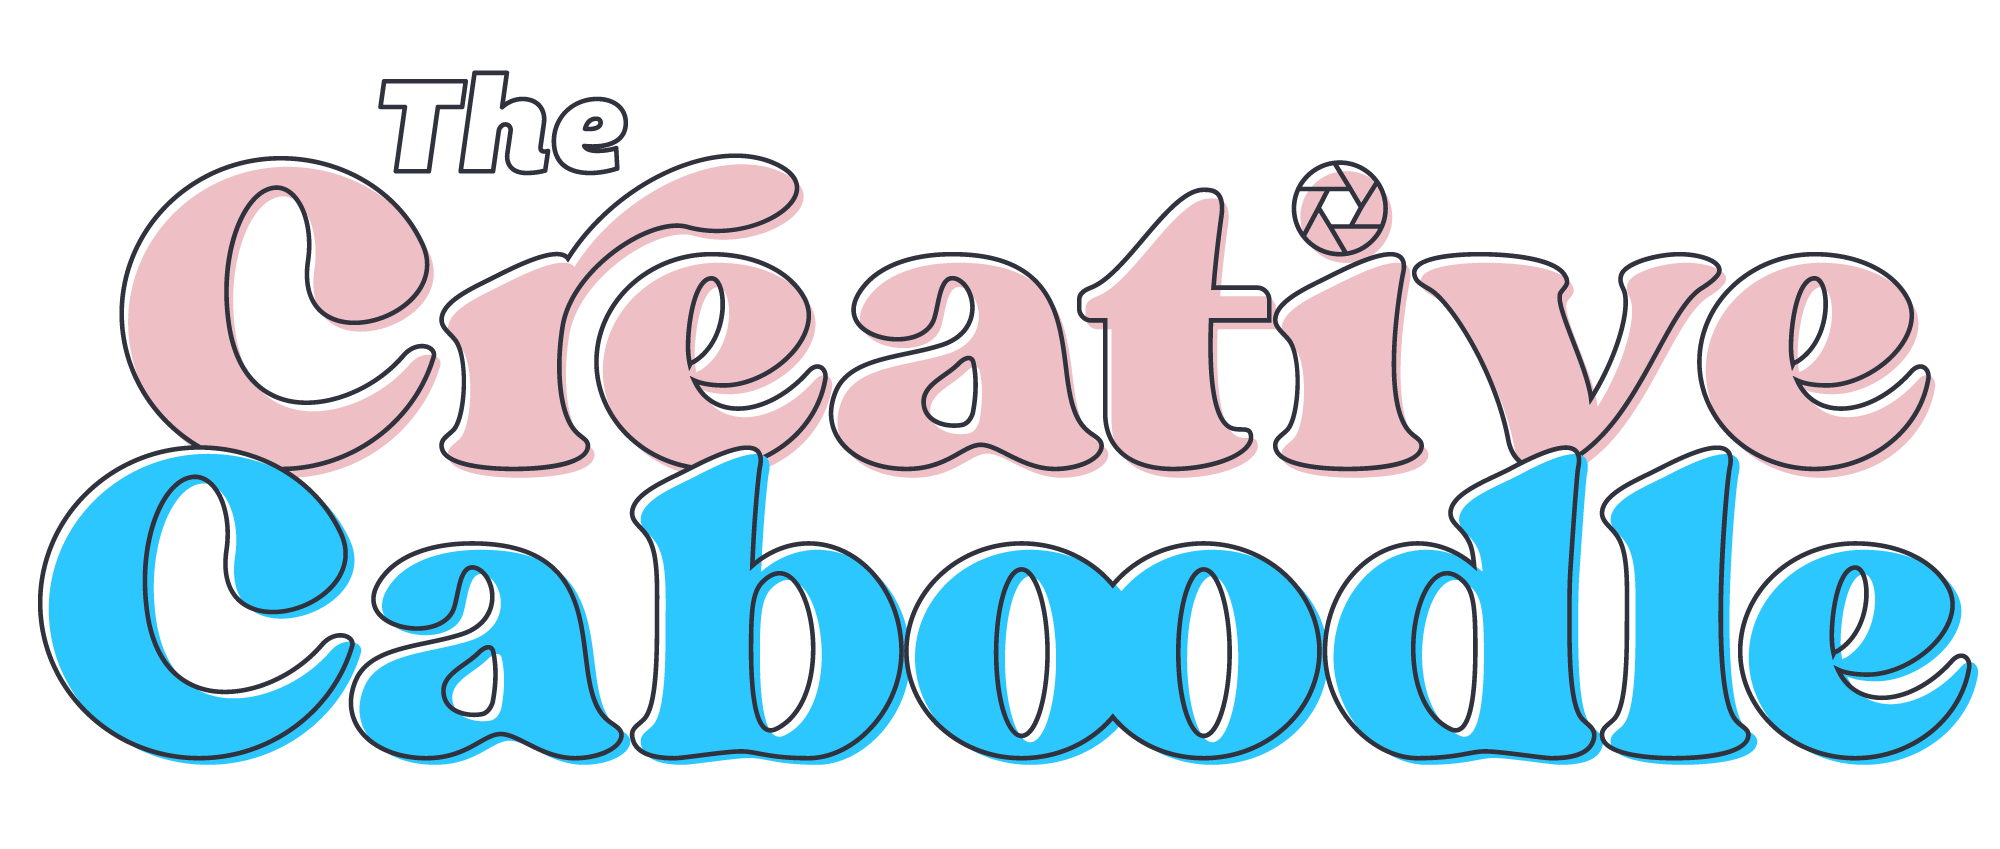 Caboodle – 360 Creative Approach